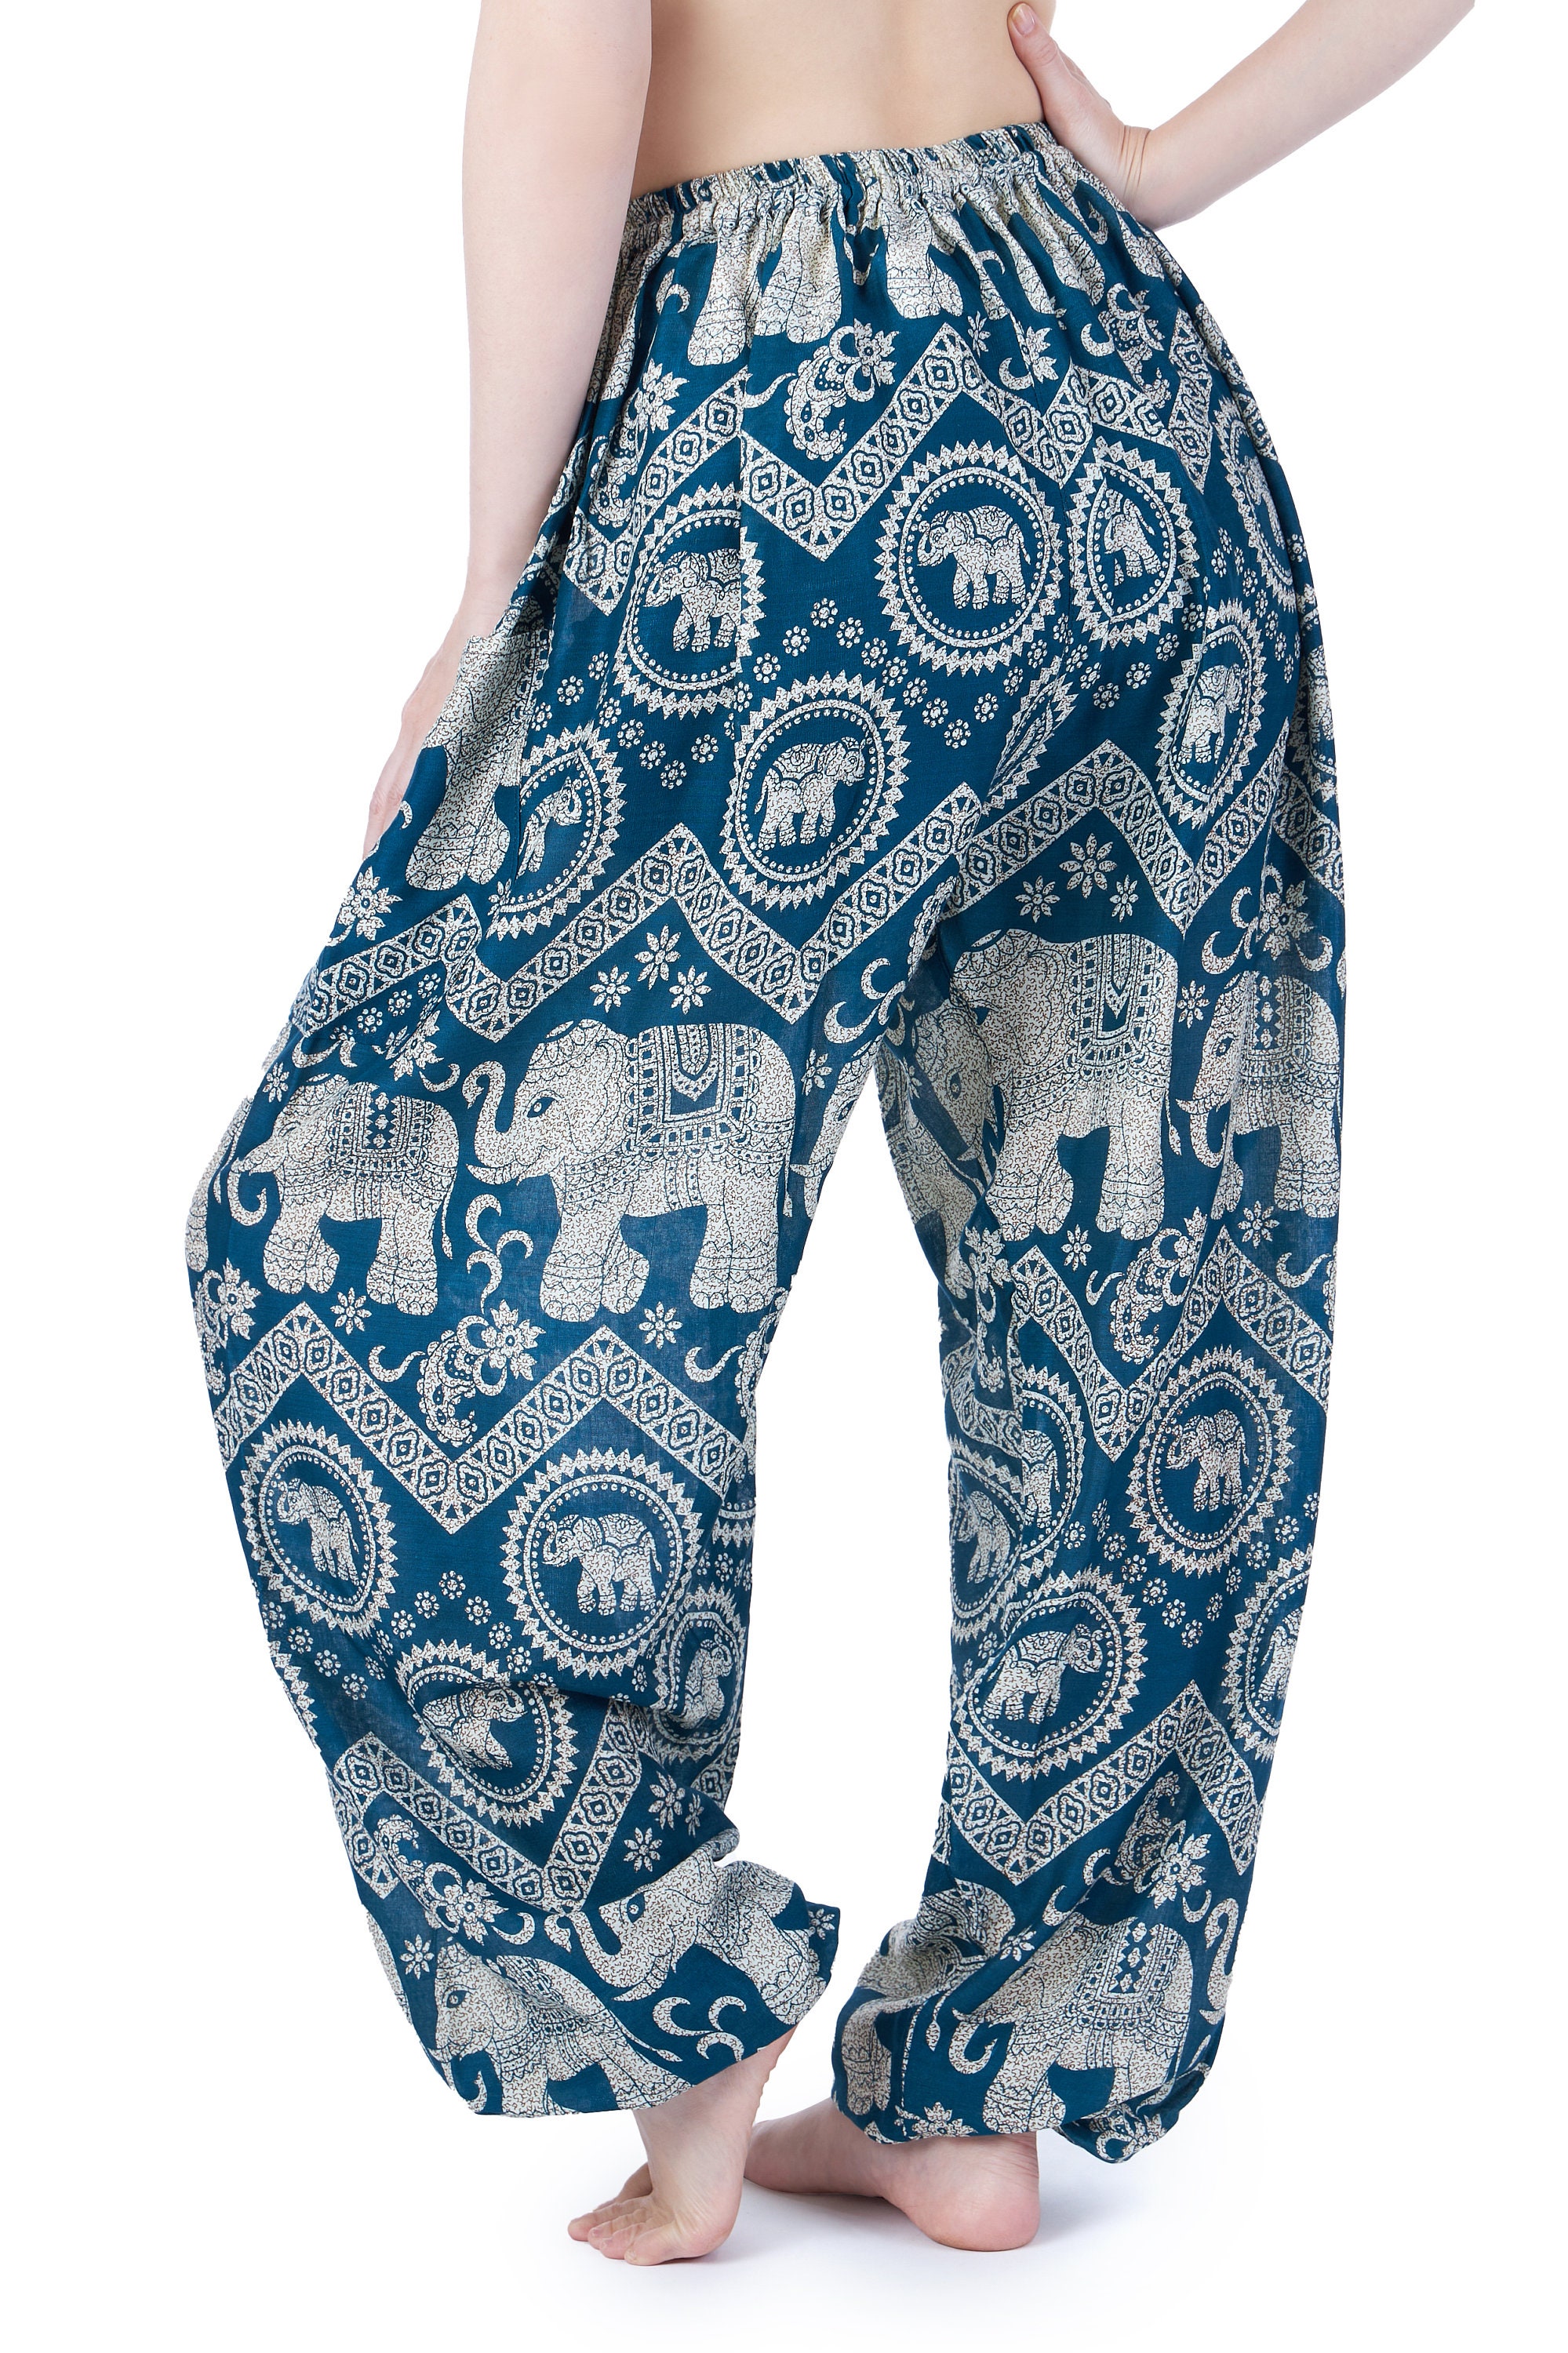 TEAL ELEPHANT PANTS Hippie Boho Yoga Harem Pants Festival Wear